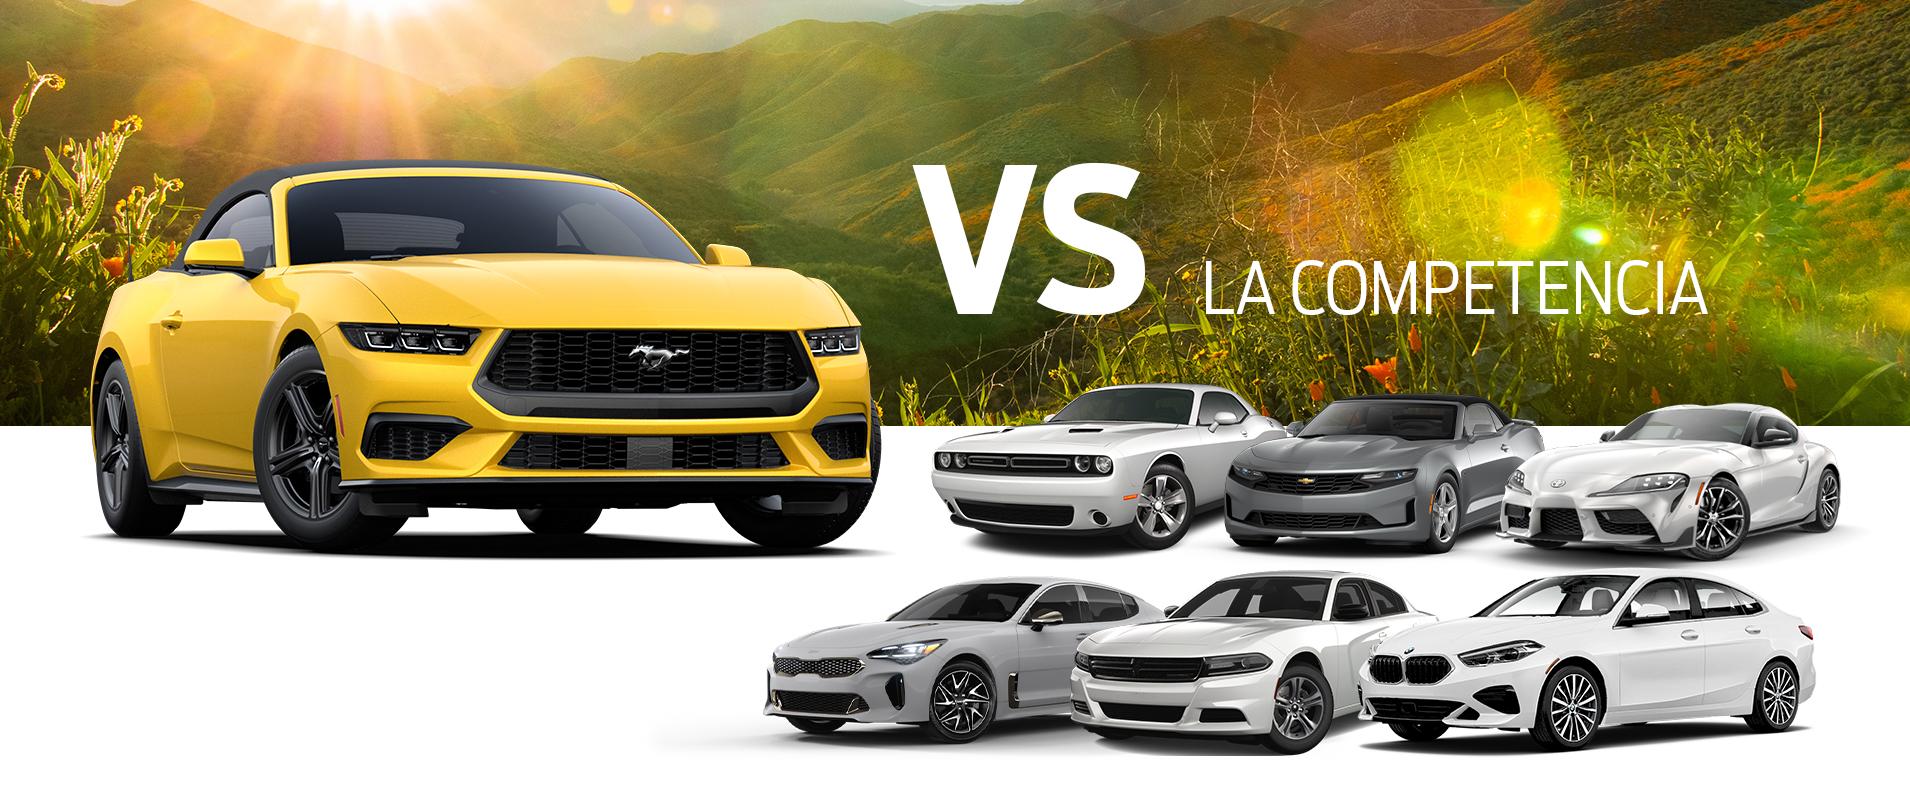 Mustang vs la competencia